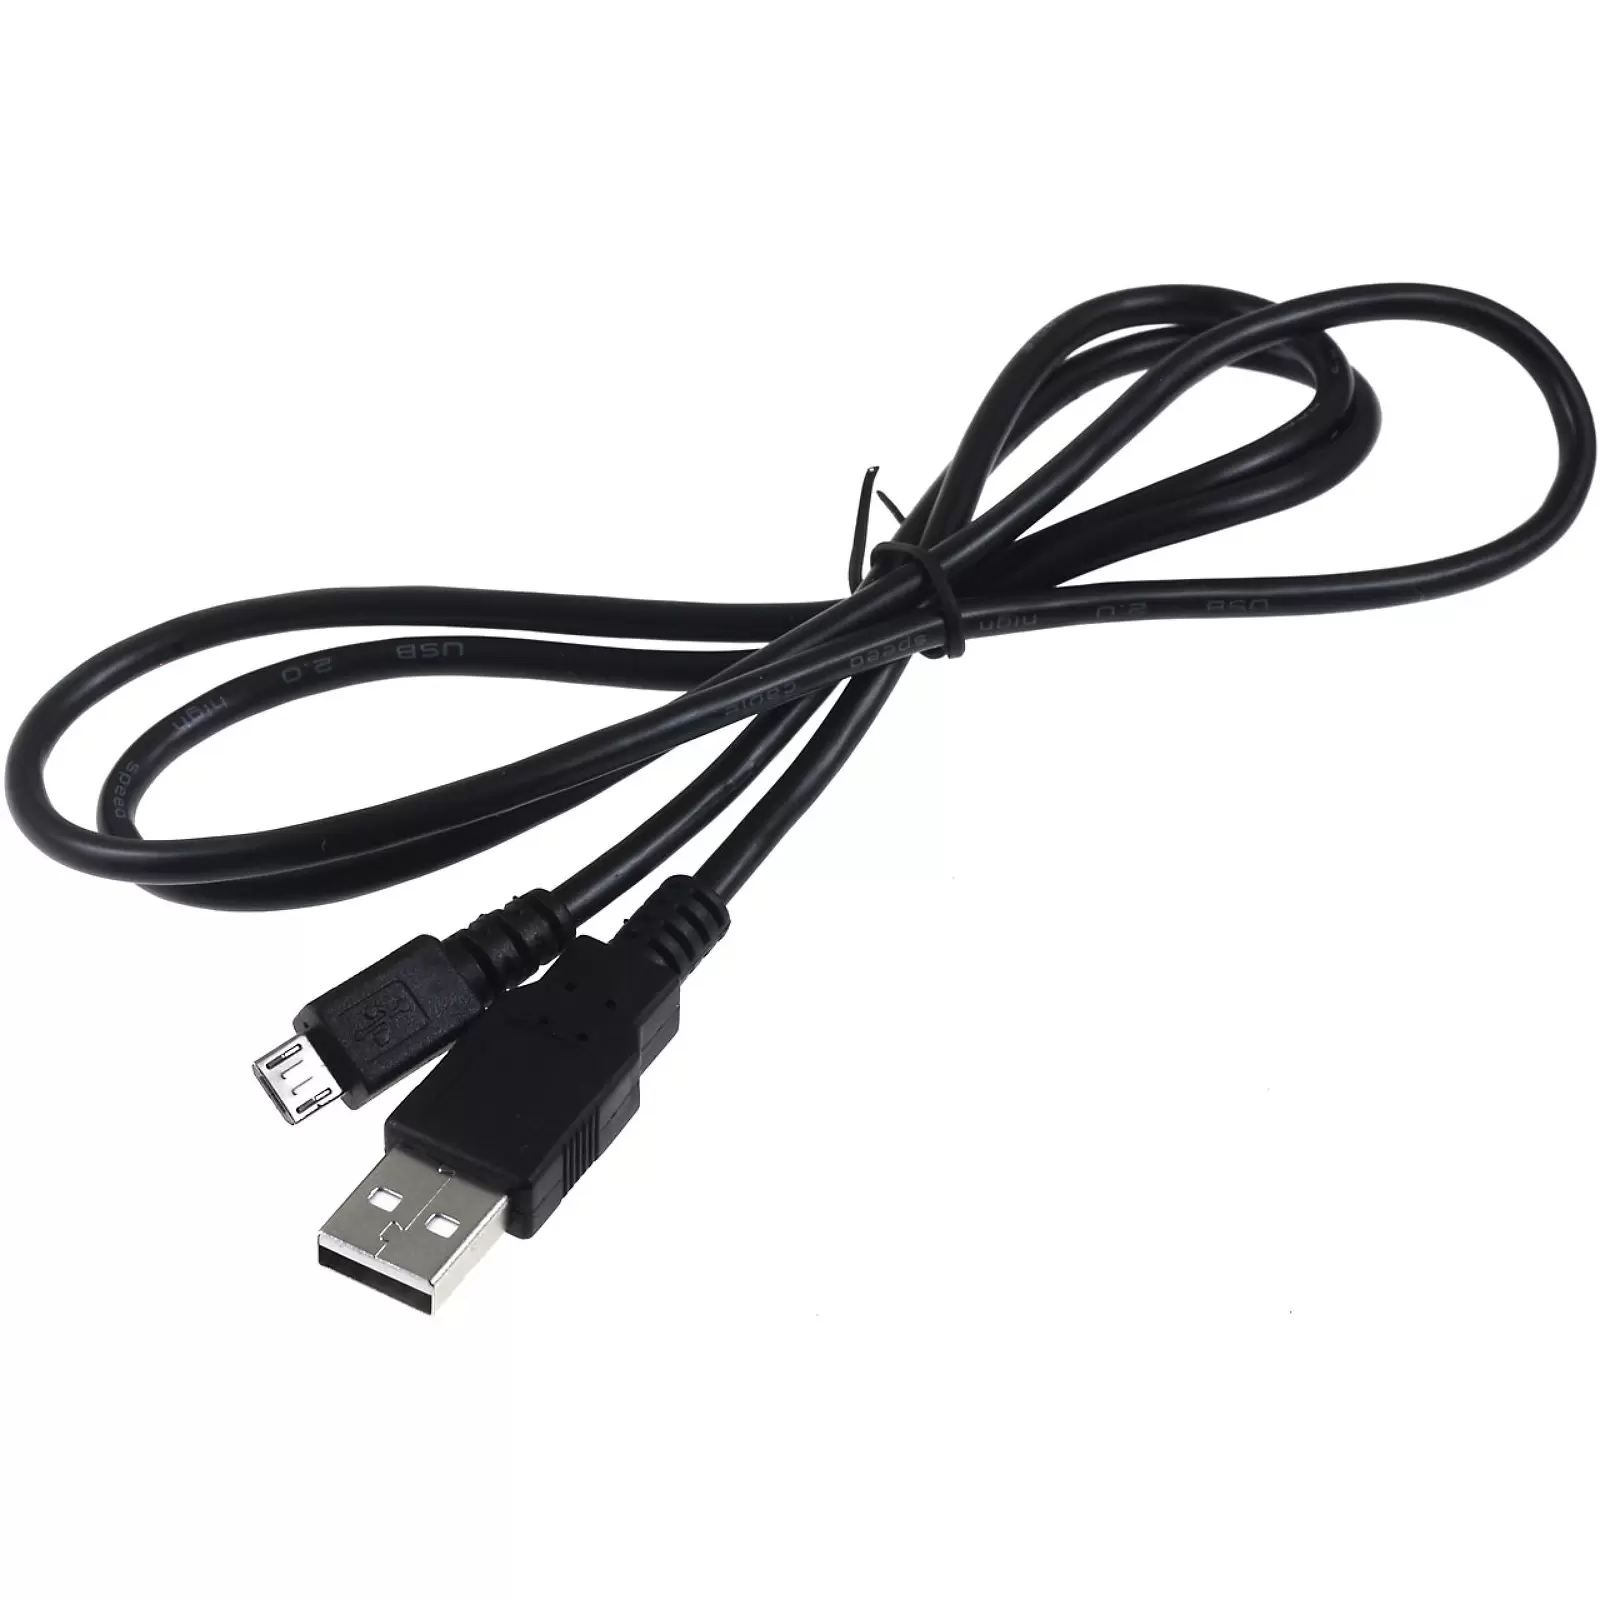 Goobay USB 2.0 Hi-Speed Kabel 1m mit Micro USB-Anschluss